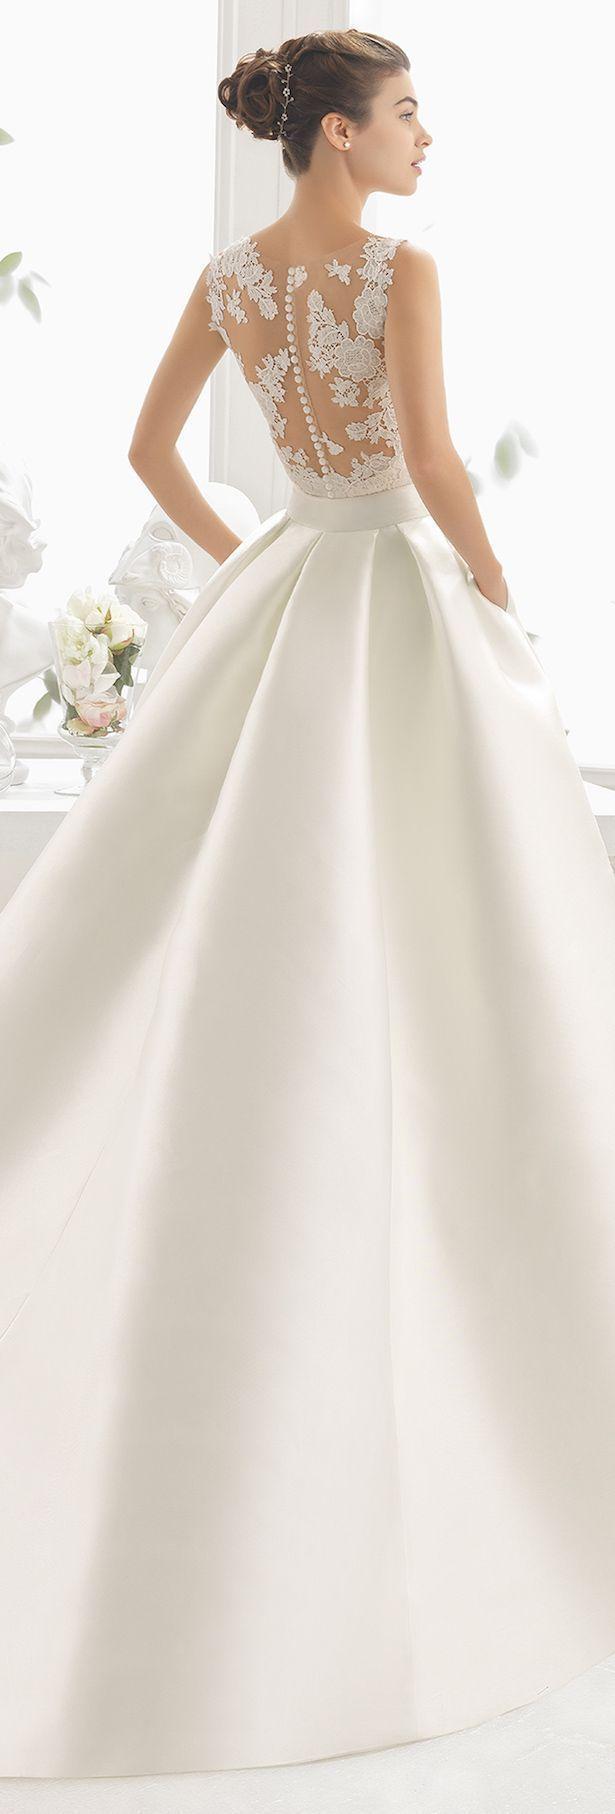 زفاف - Wedding Dress By Aire Barcelona 2017 Bridal Collection #weddingdress 